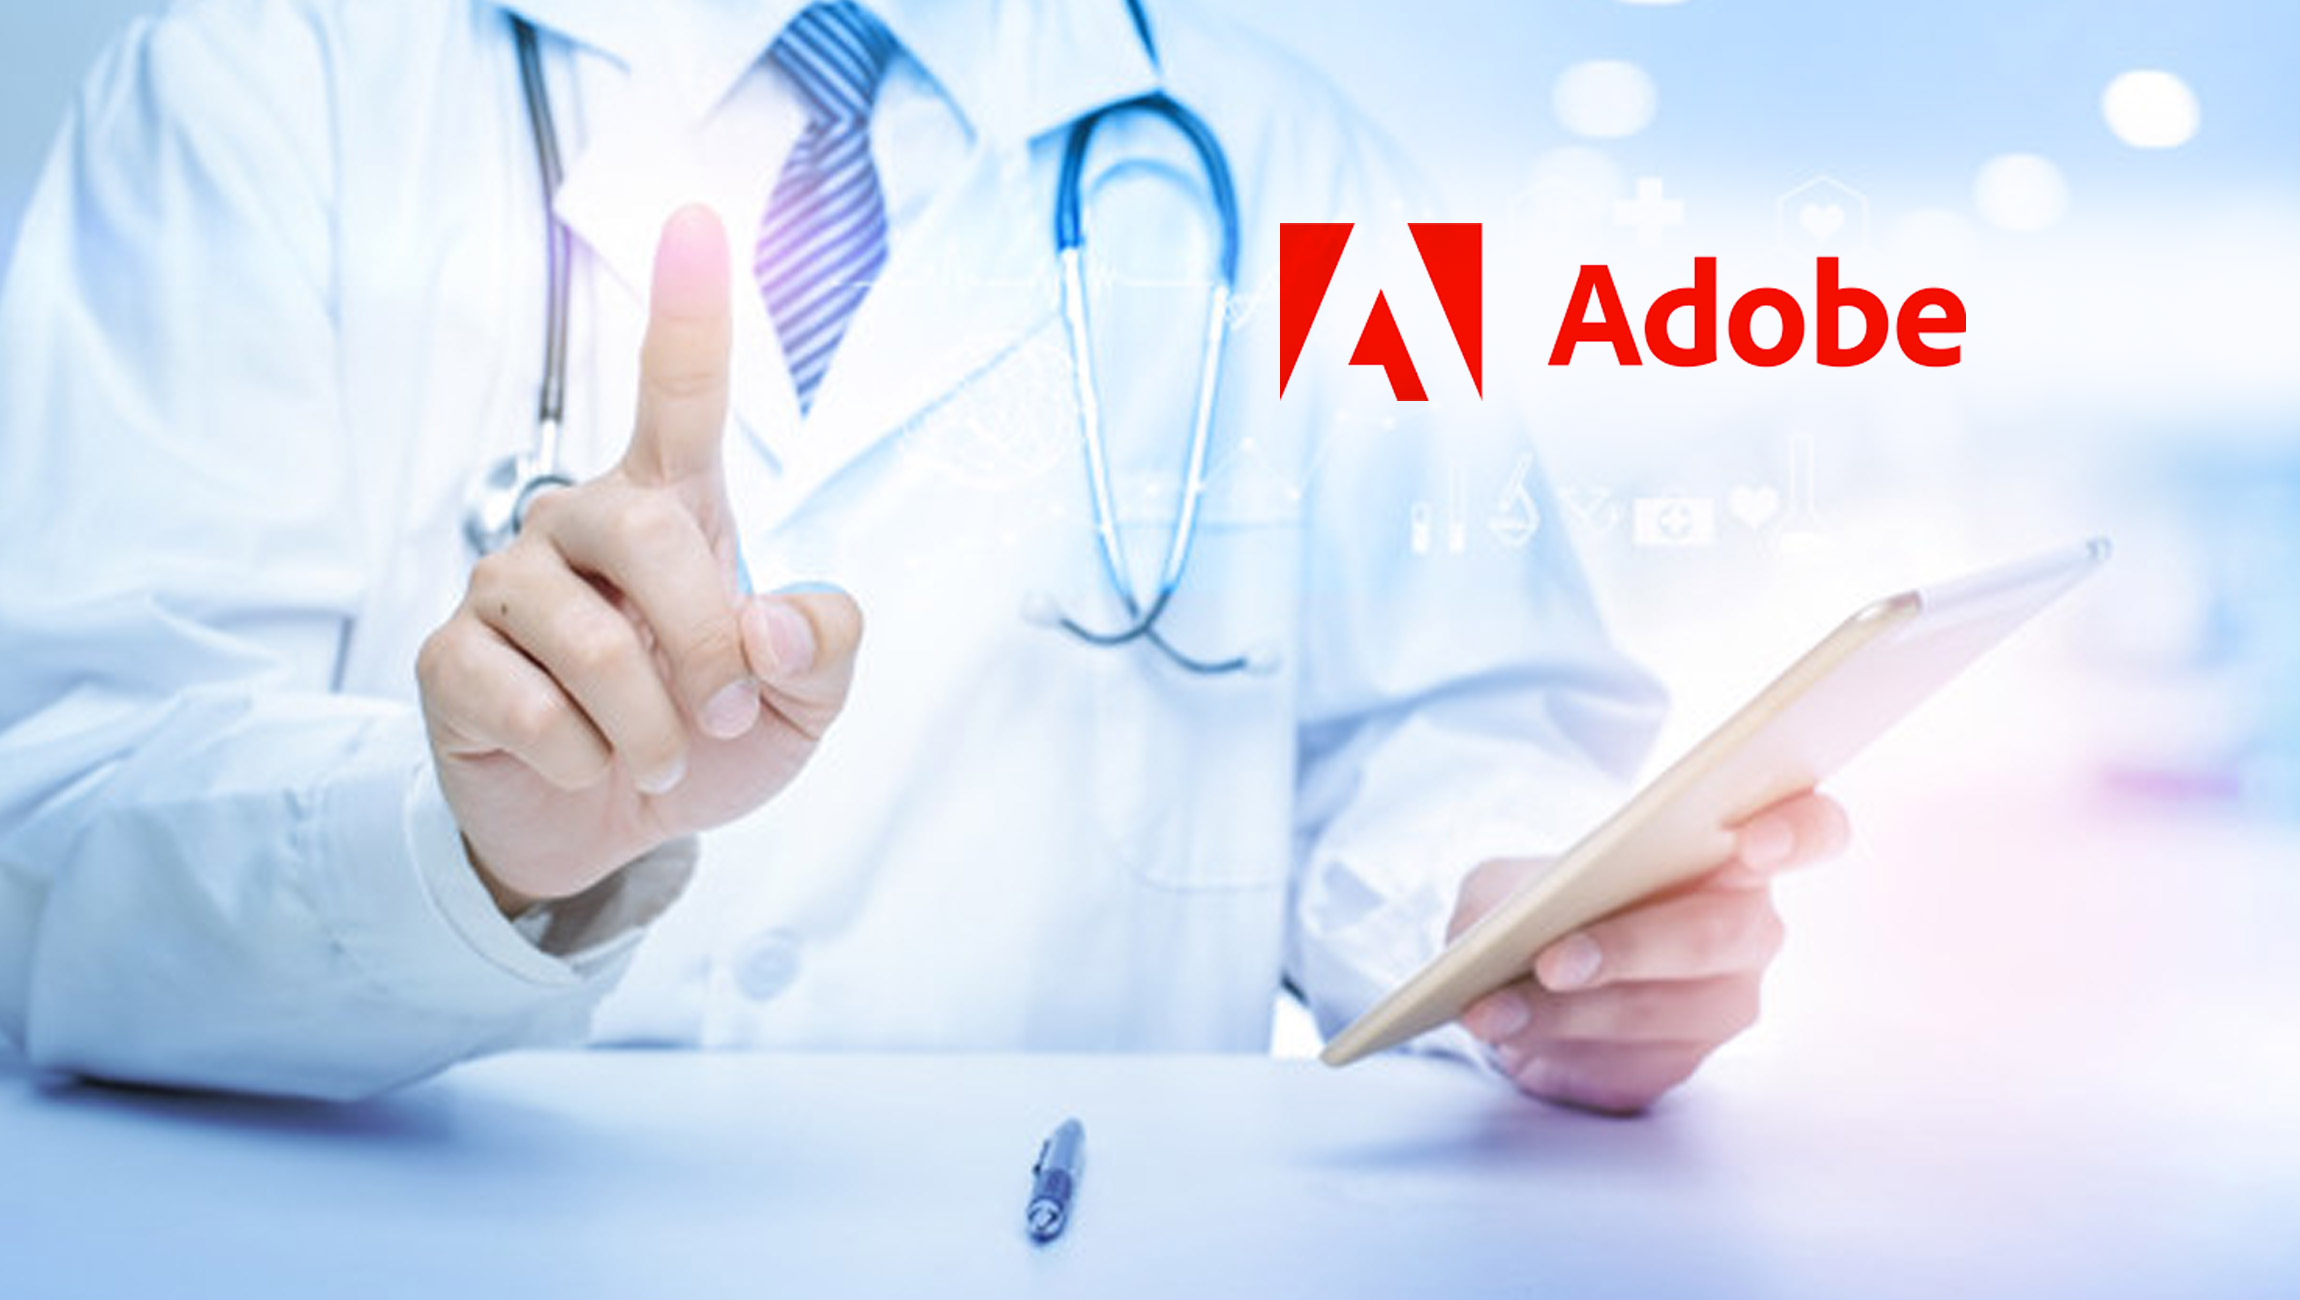 Adobe Powers Digital Healthcare Innovation